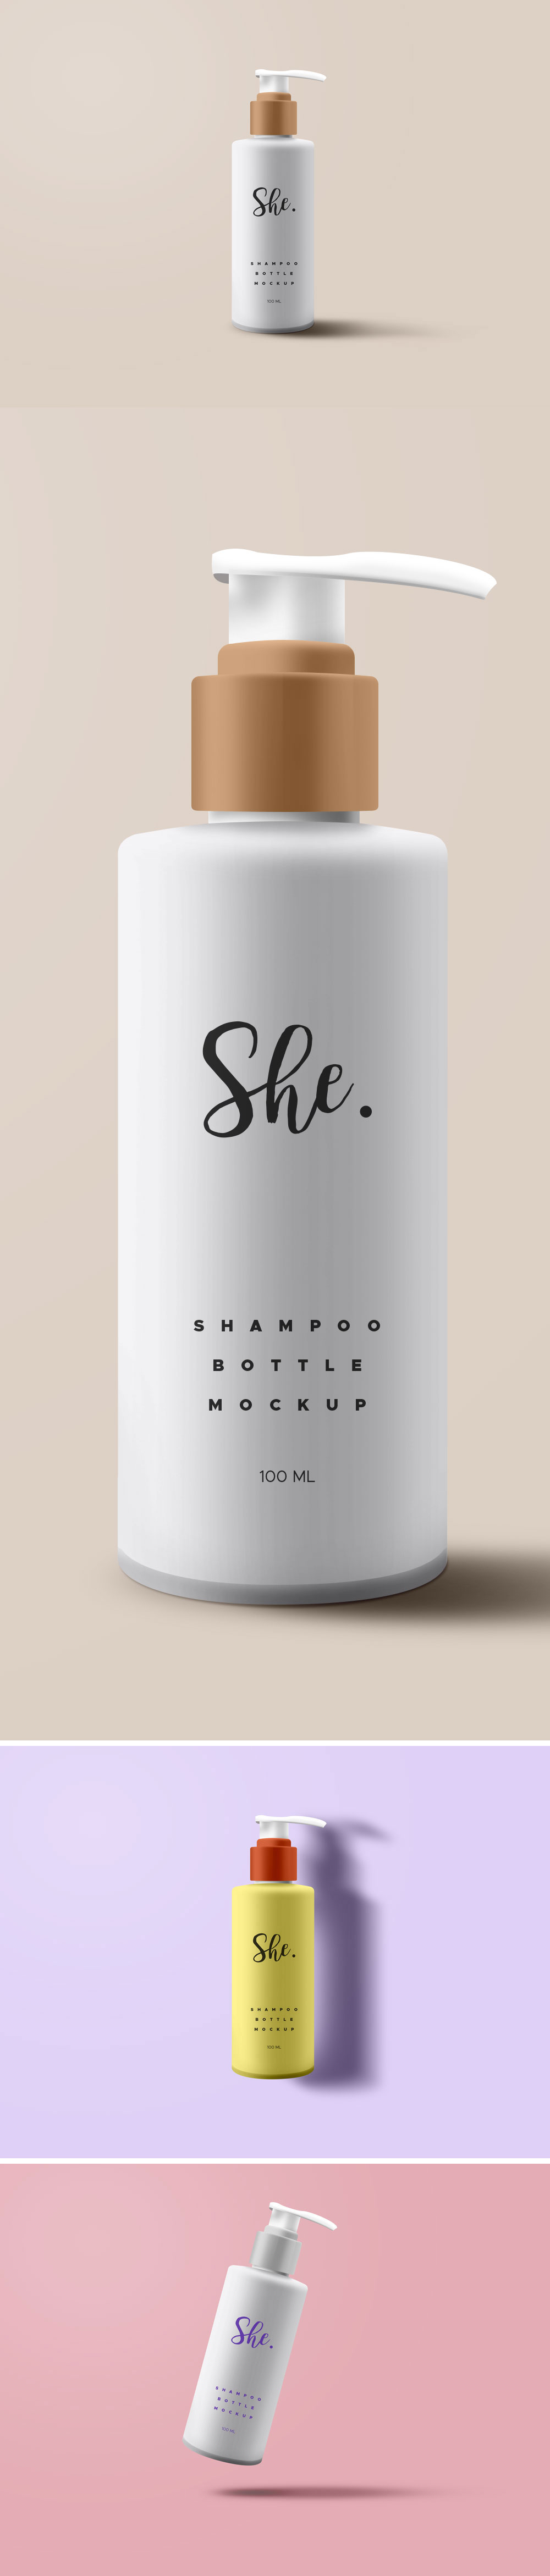 Shampoo Bottle Mockup PSD